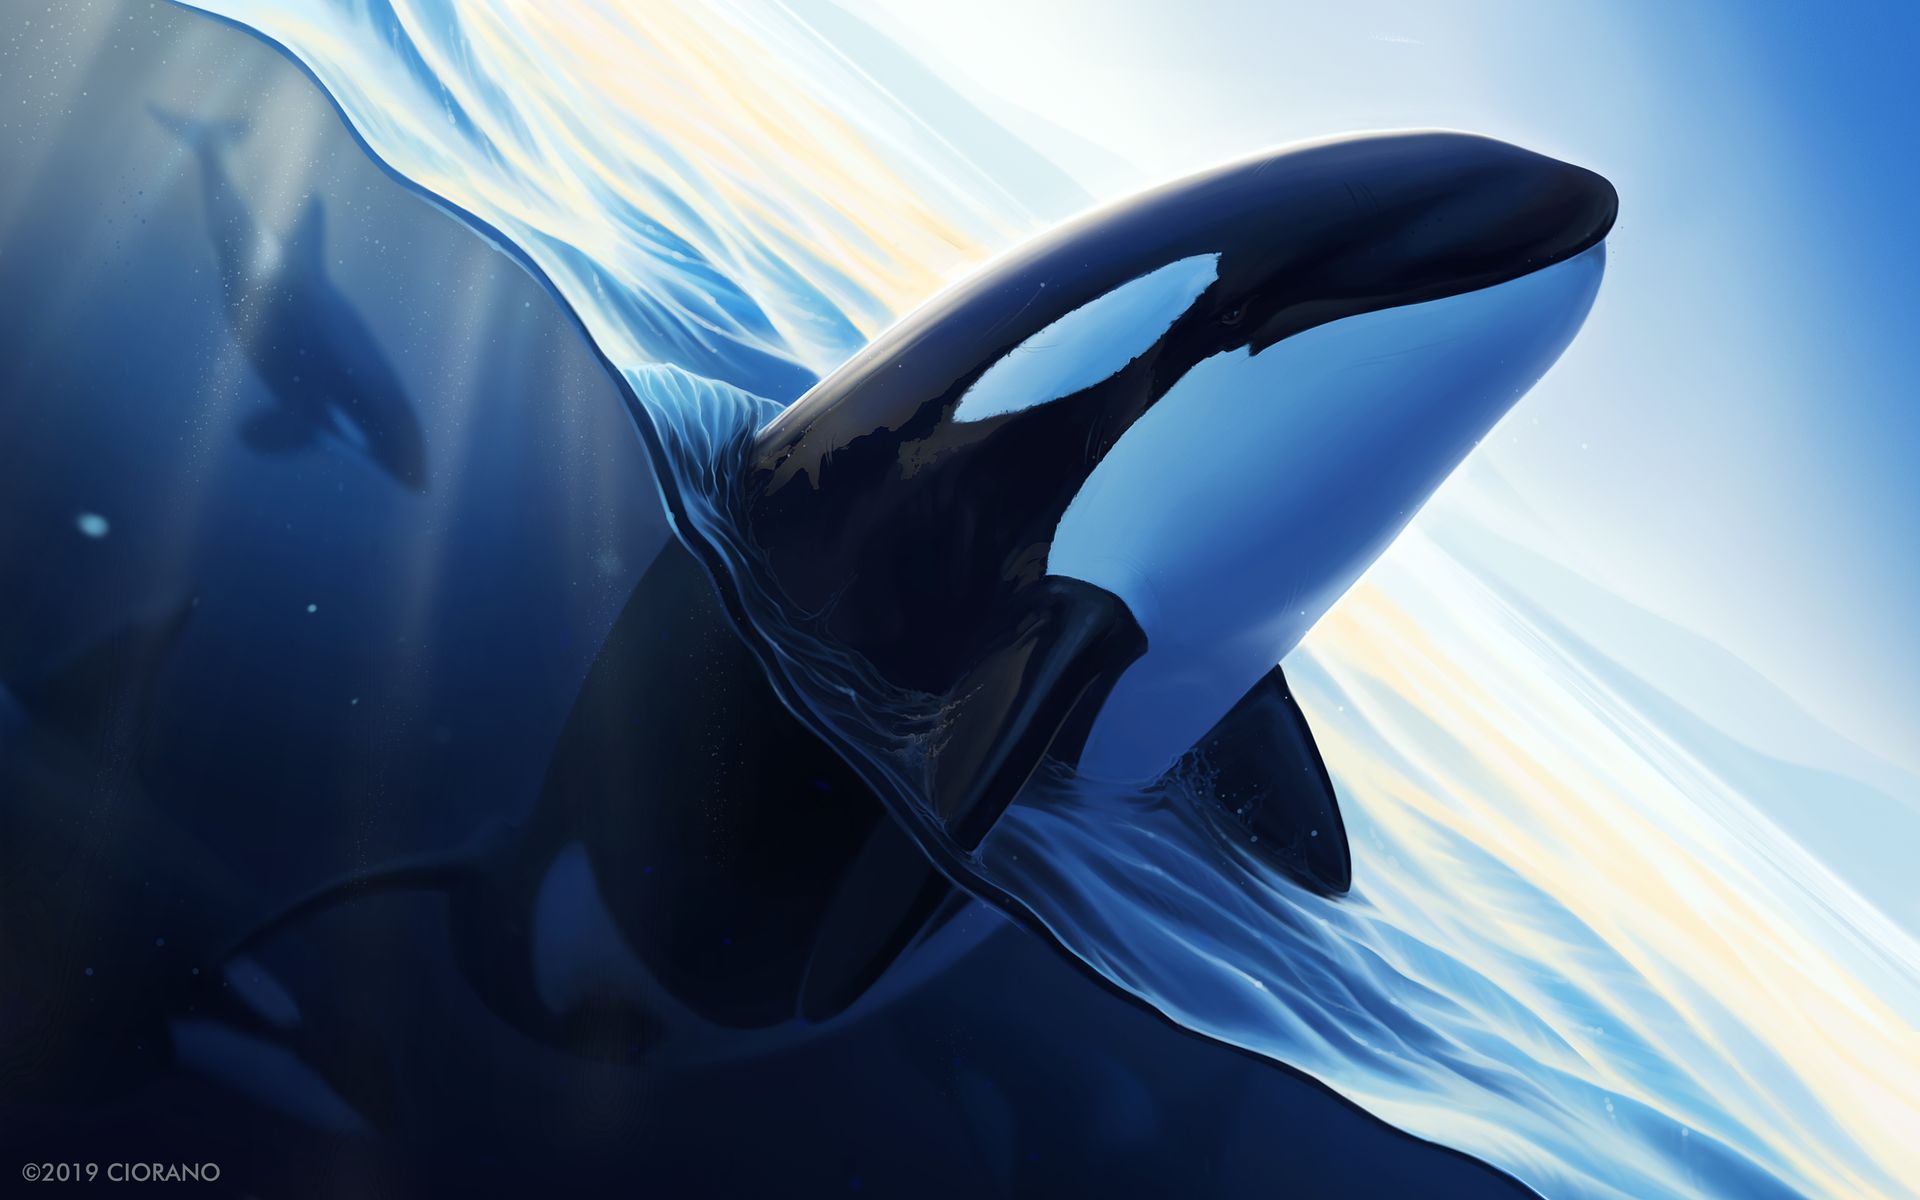 orca, animal